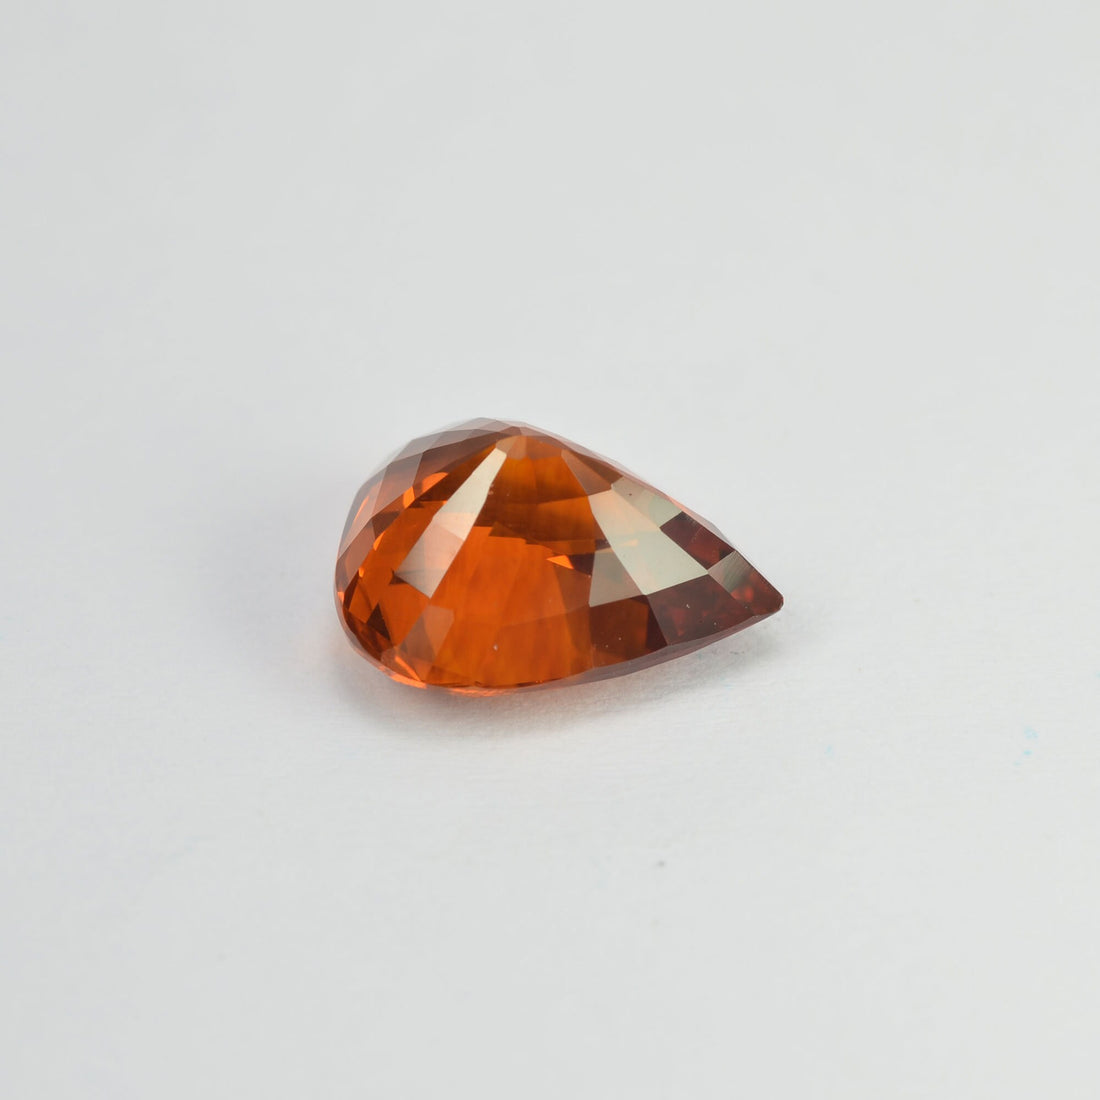 2.98 cts Natural Orange Sapphire Loose Gemstone Oval Cut